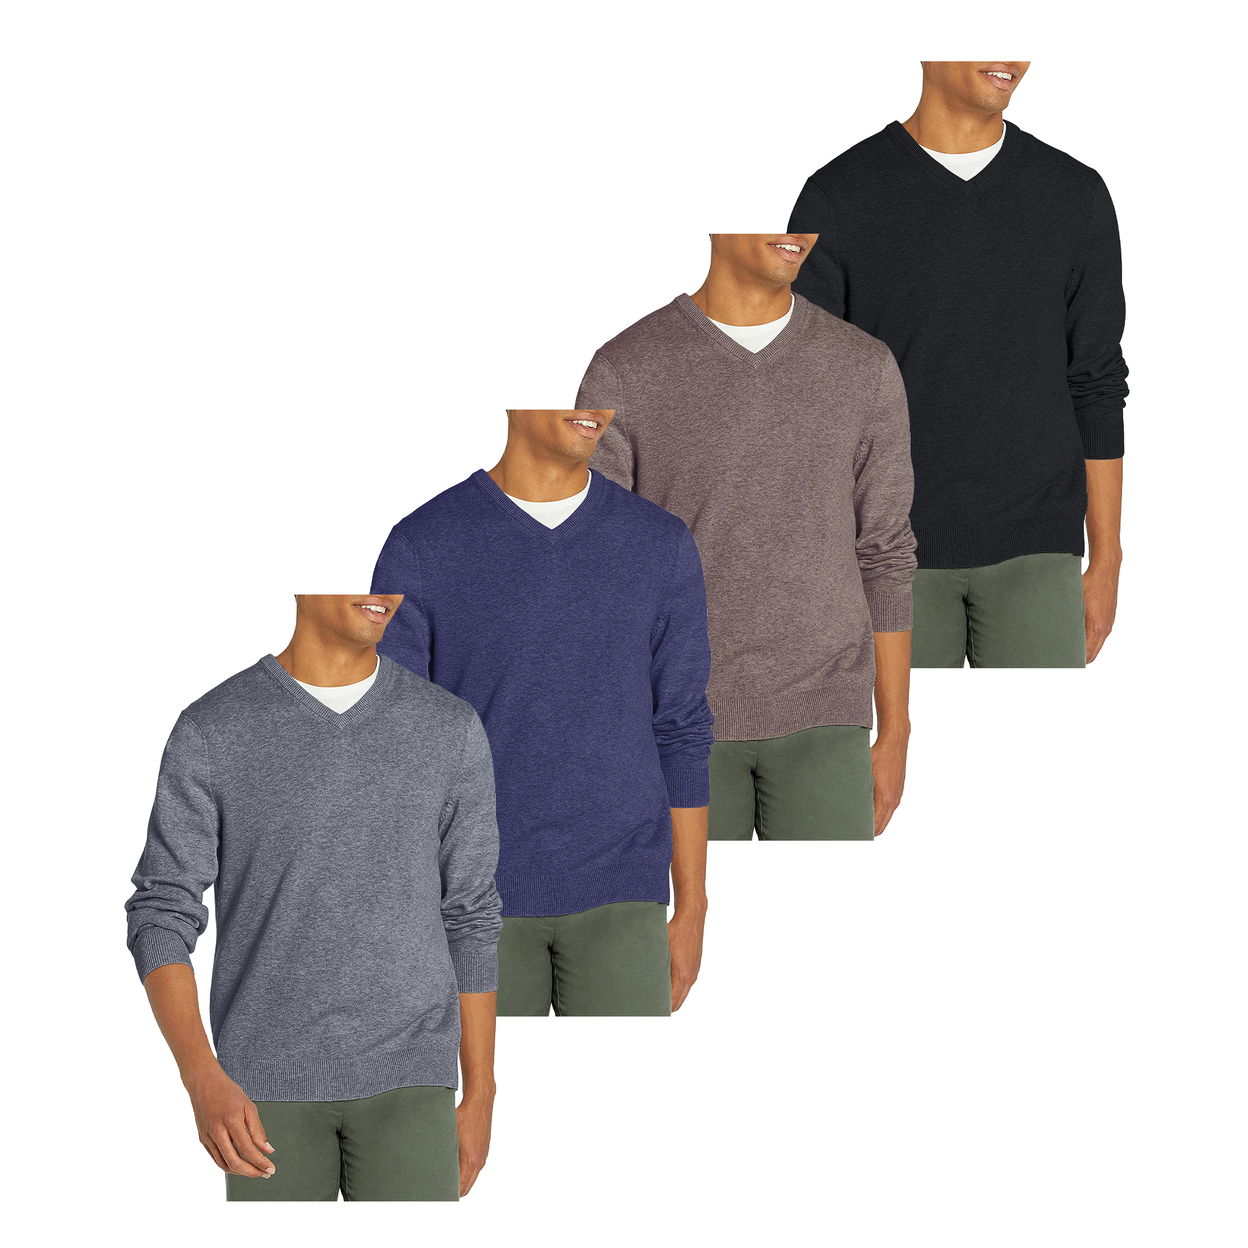 2-Pack: Men's Casual Ultra Soft Slim Fit Warm Knit V-Neck Sweater - Black & Brown, Large